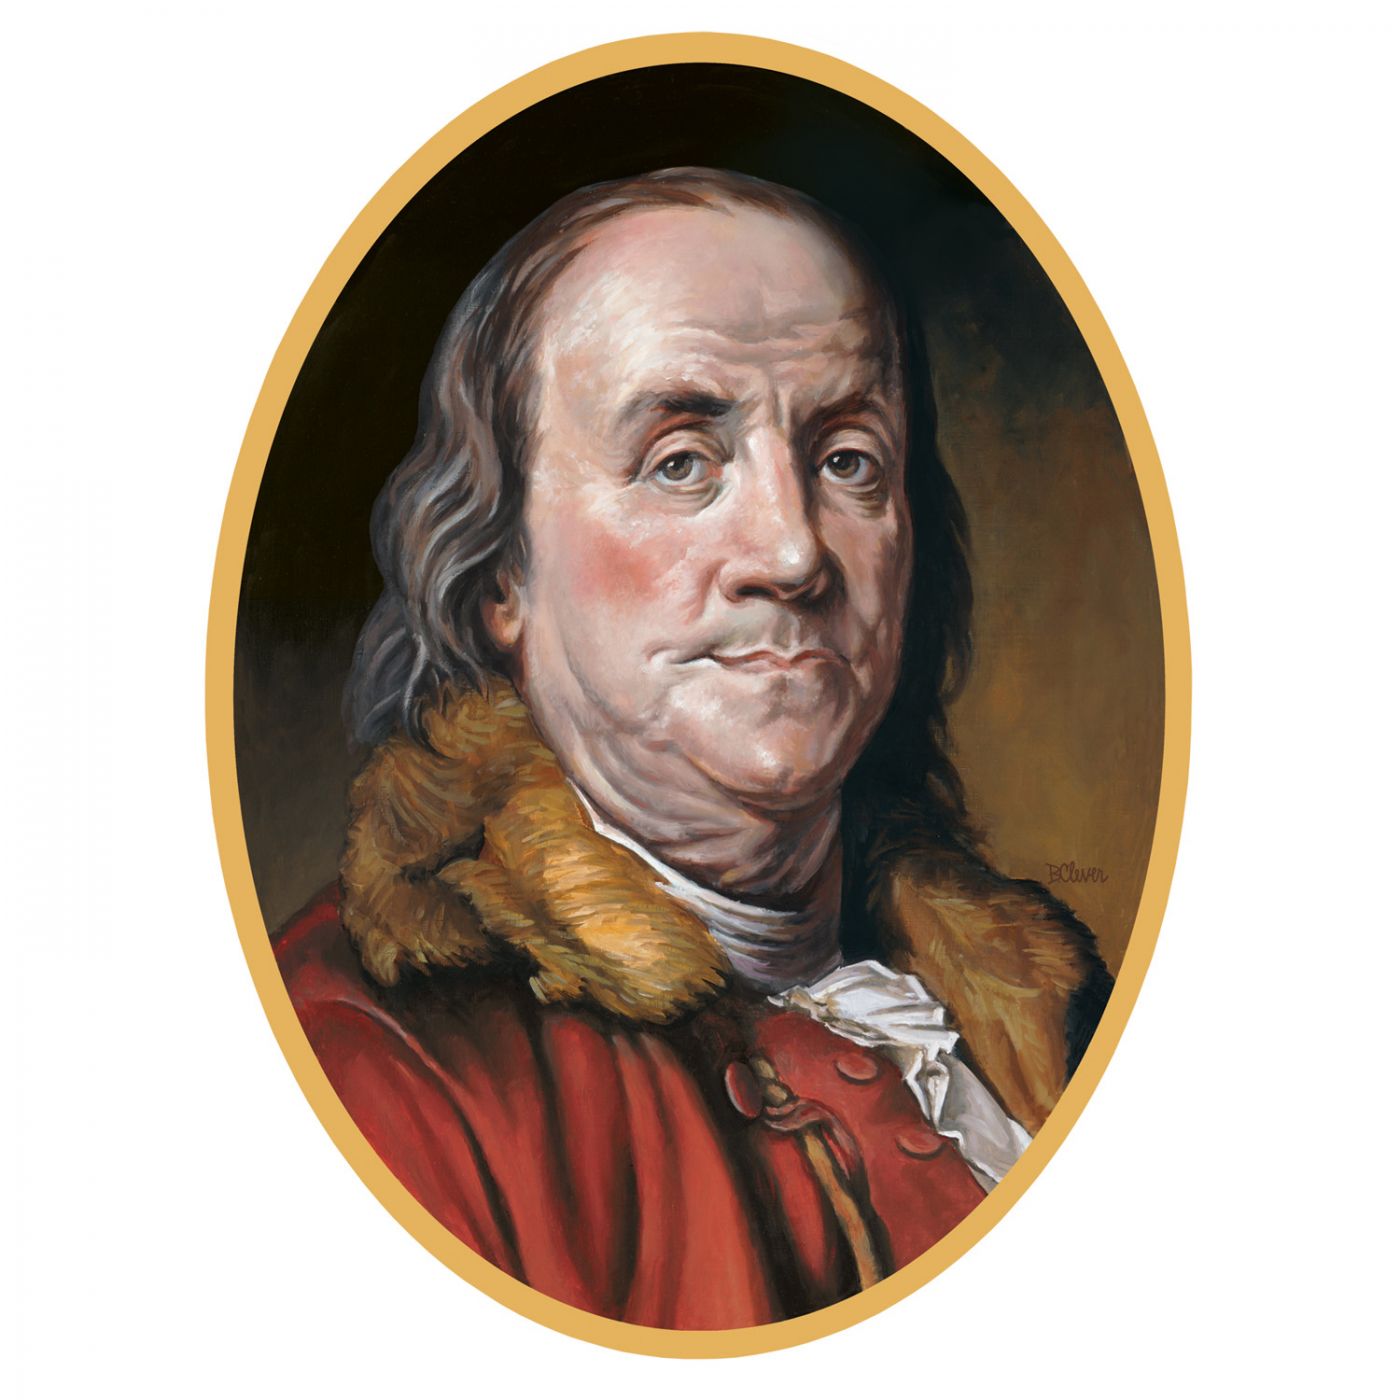 Ben Franklin Cutout image